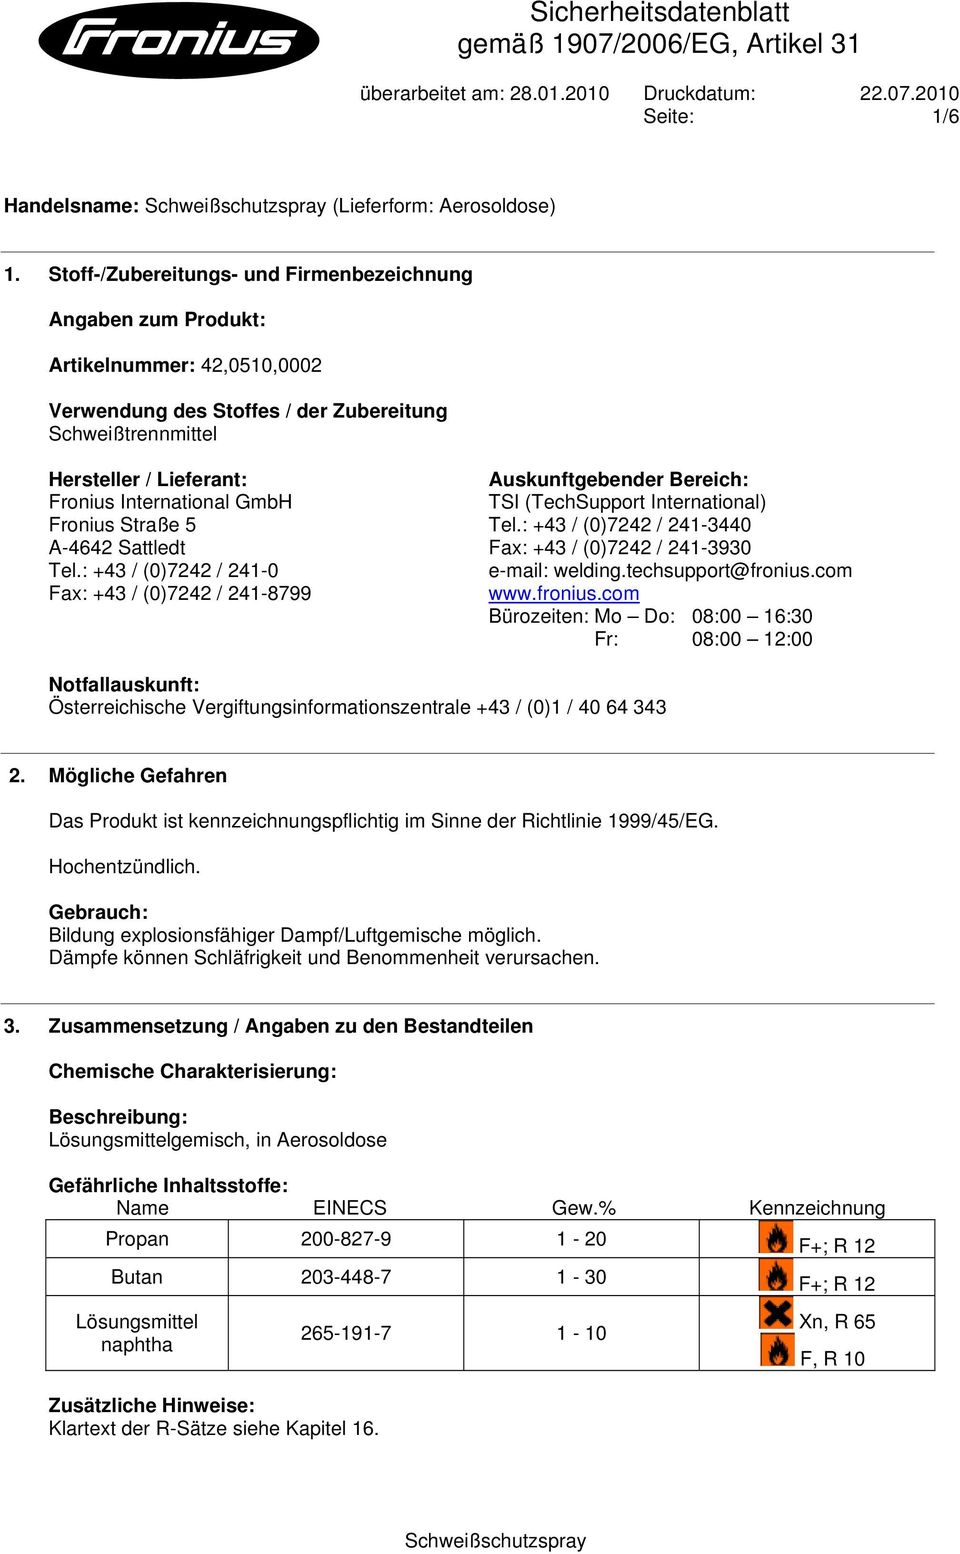 GmbH Fronius Straße 5 A-4642 Sattledt Tel.: +43 / (0)7242 / 241-0 Fax: +43 / (0)7242 / 241-8799 Auskunftgebender Bereich: TSI (TechSupport International) Tel.